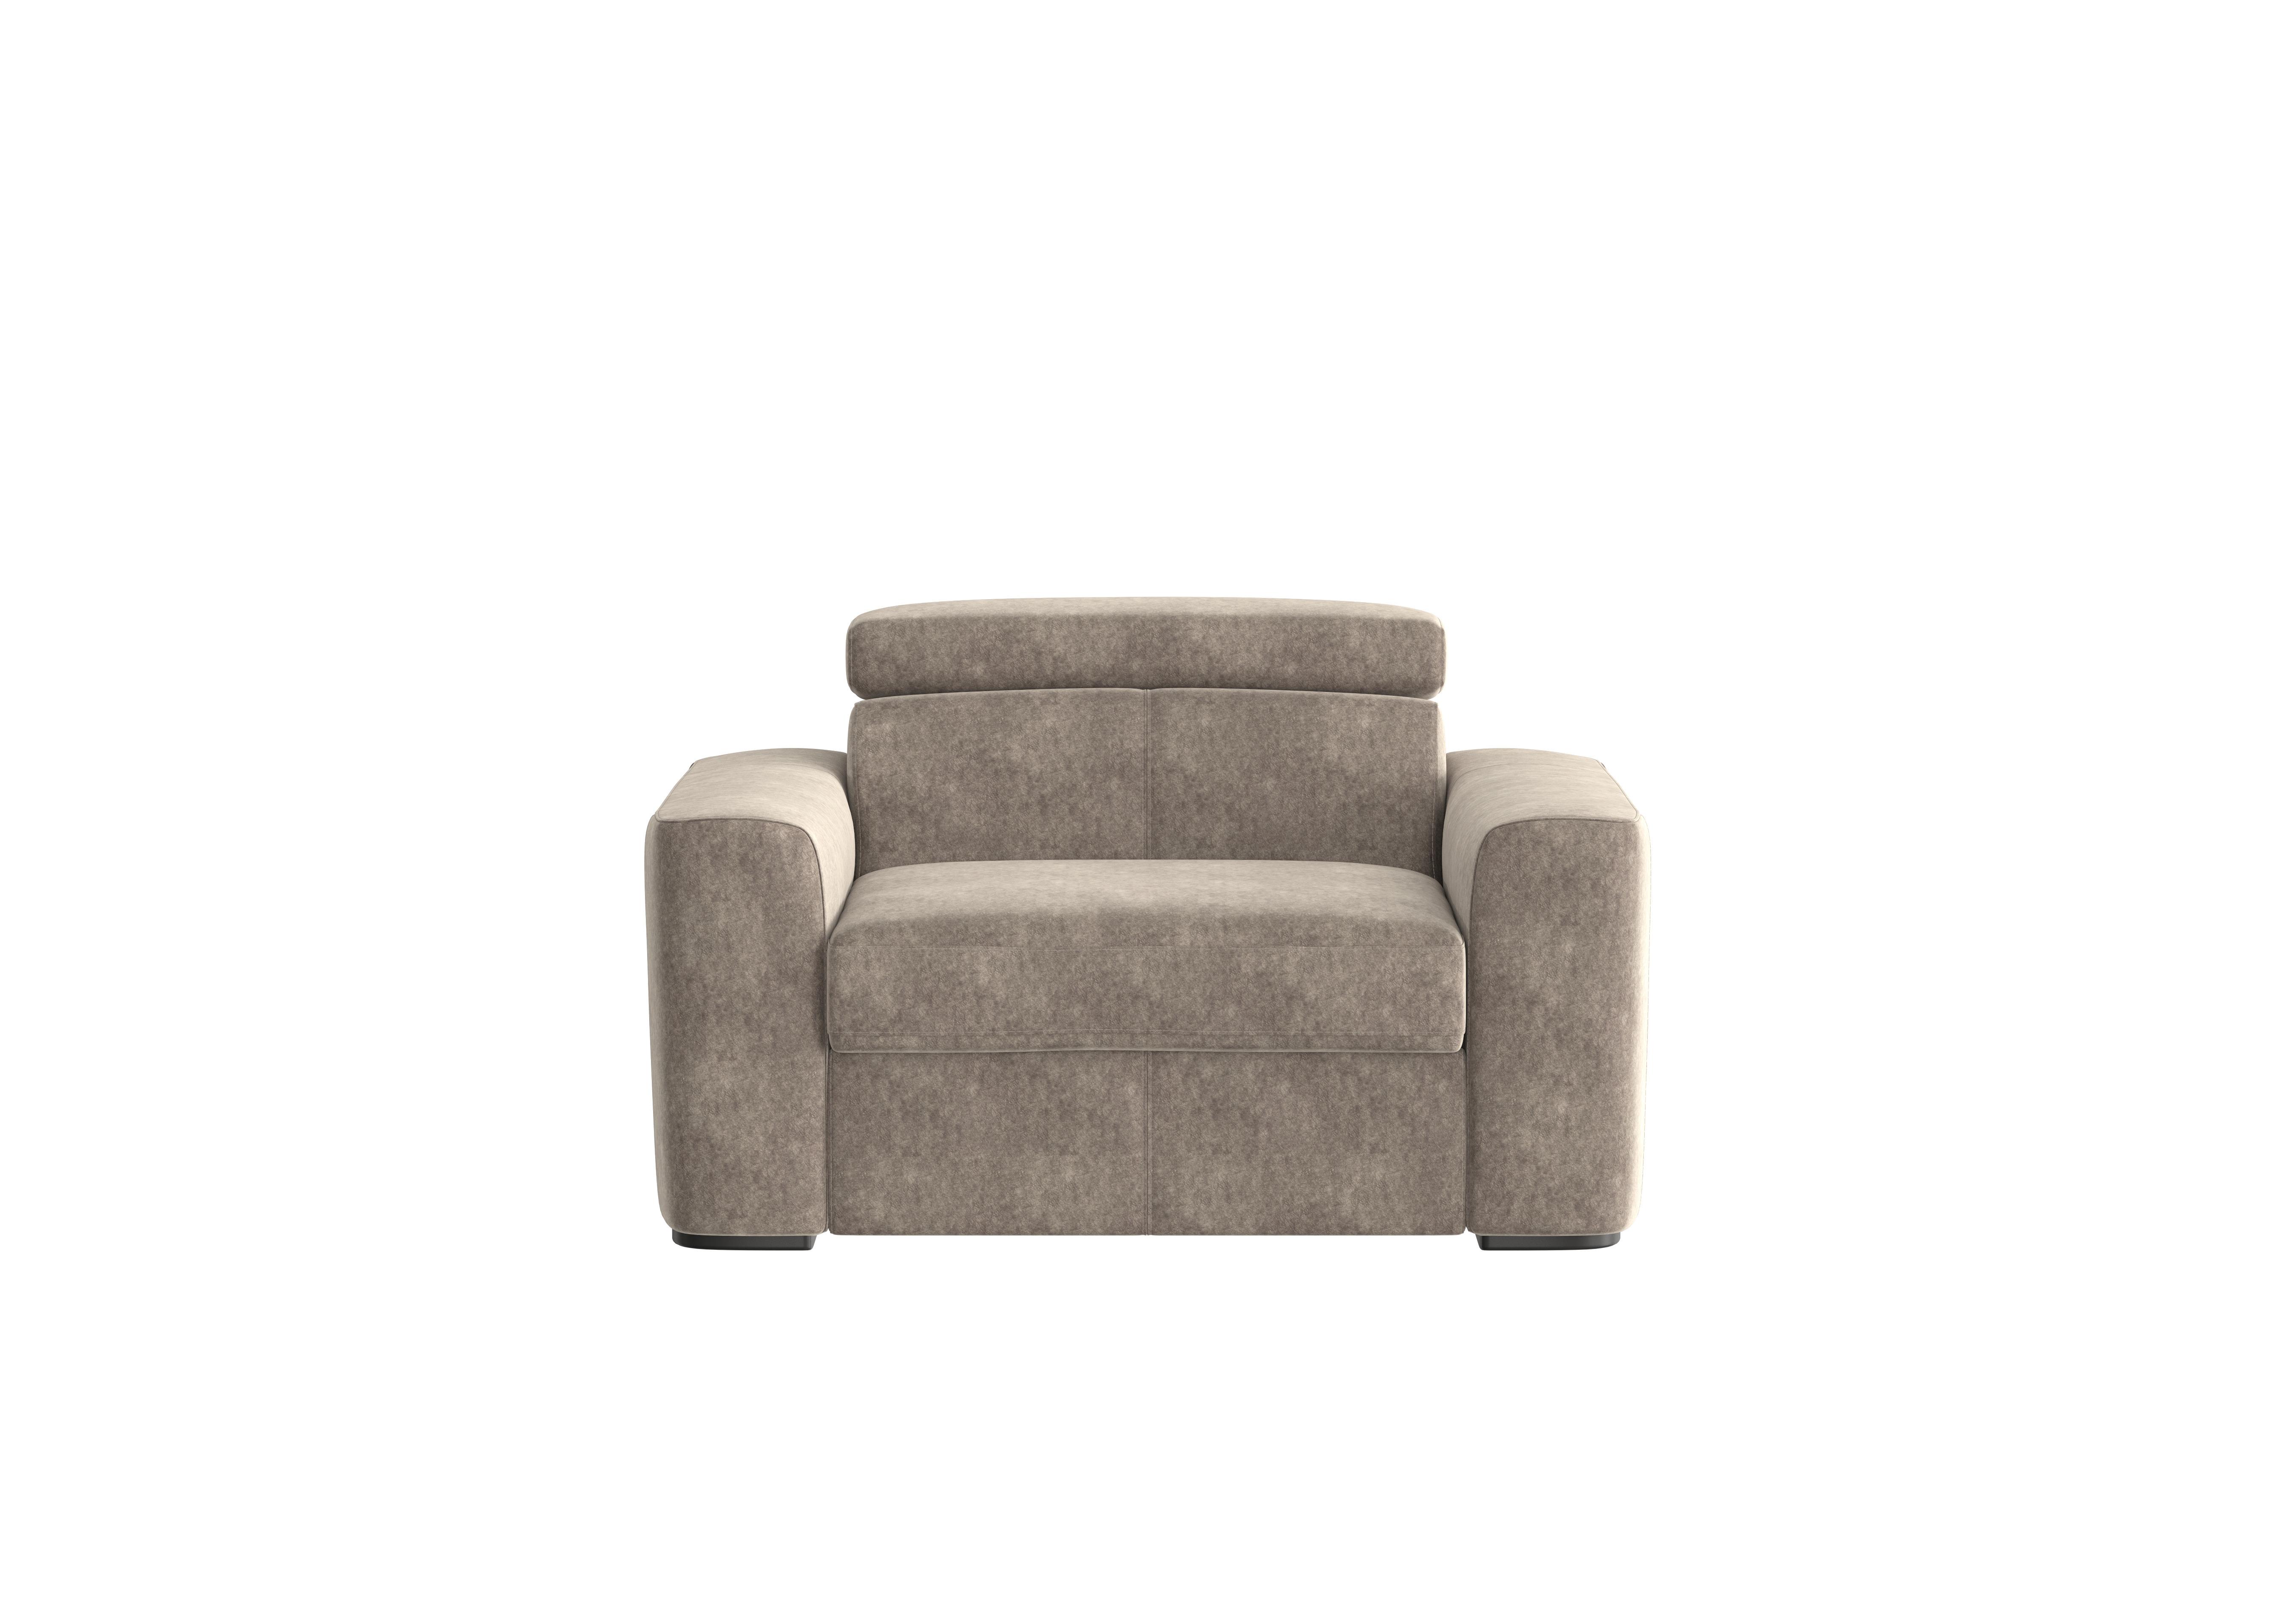 Infinity Large Fabric Armchair in Bfa-Bnn-R29 Fv1 Mink on Furniture Village